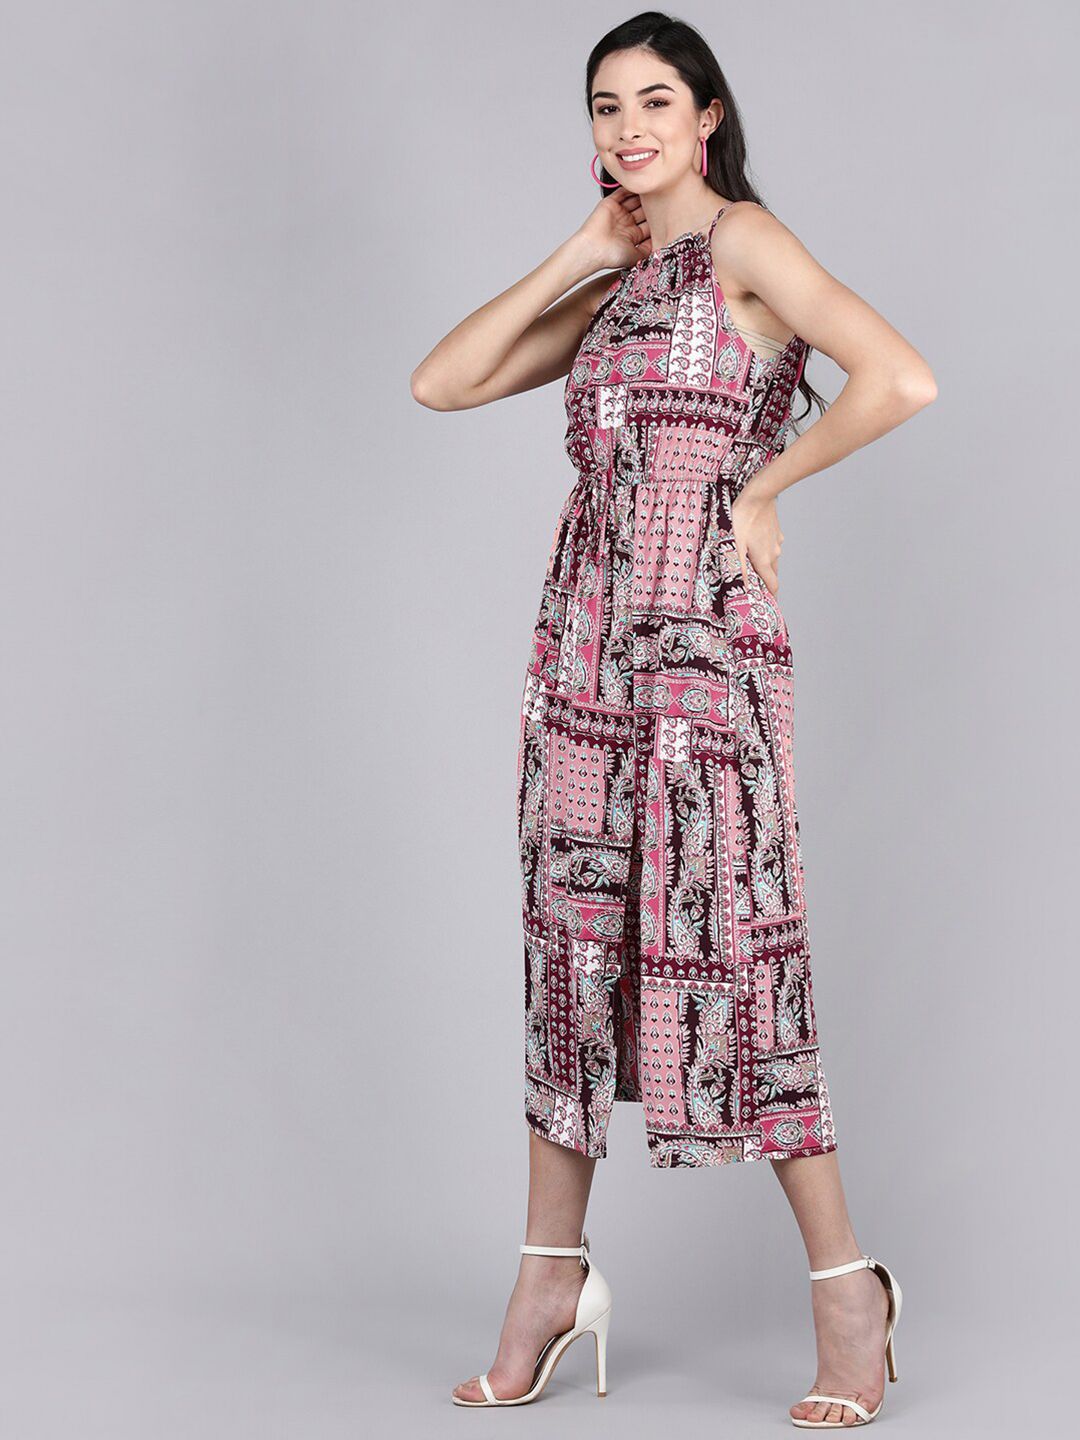 AHIKA Burgundy Ethnic Motifs Georgette Midi Dress Price in India